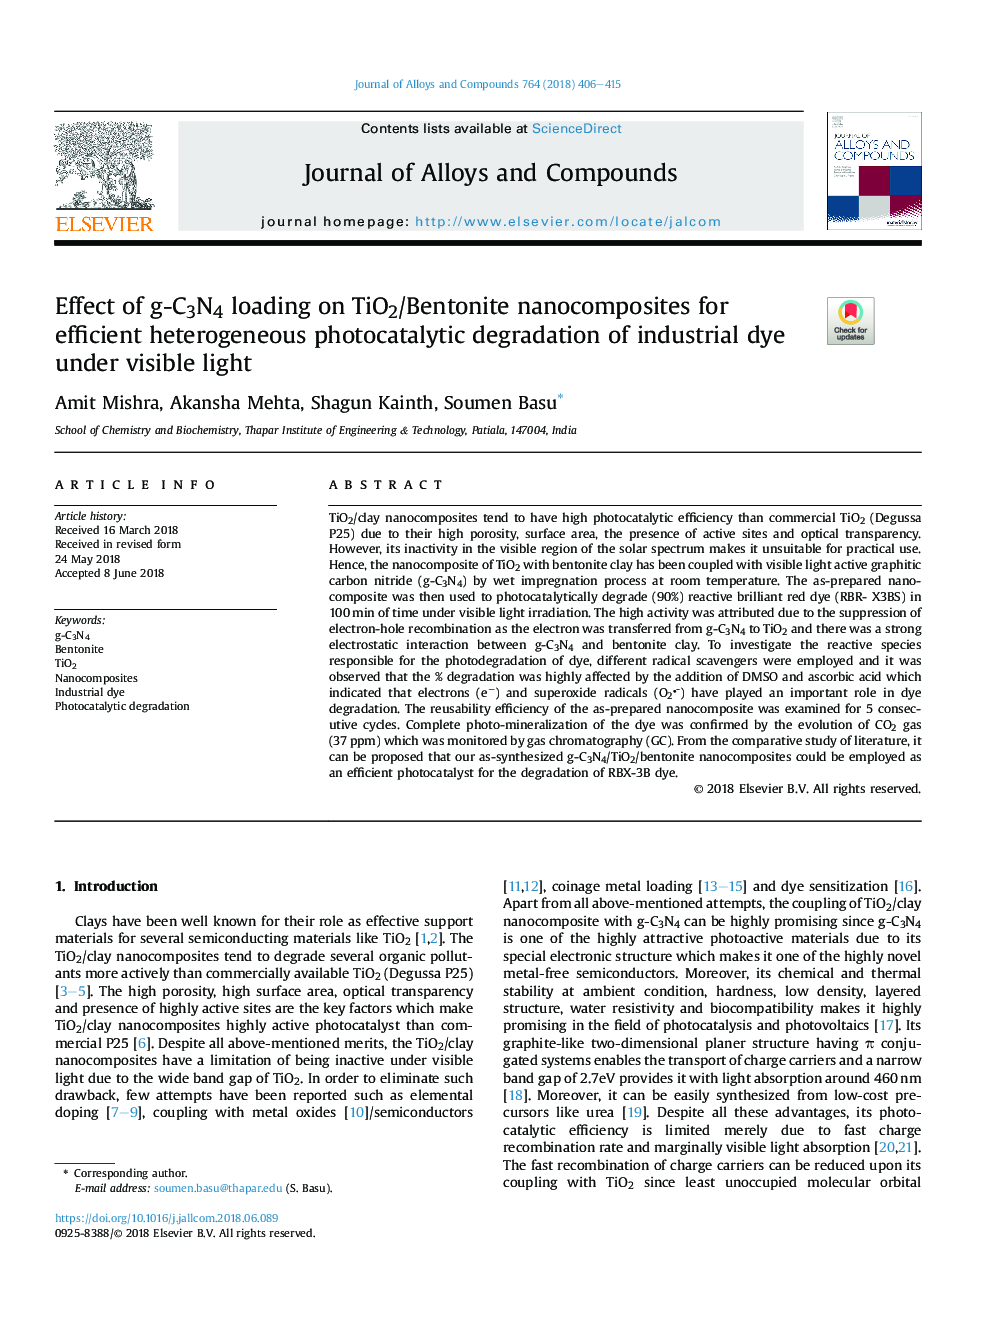 Effect of g-C3N4 loading on TiO2/Bentonite nanocomposites for efficient heterogeneous photocatalytic degradation of industrial dye under visible light